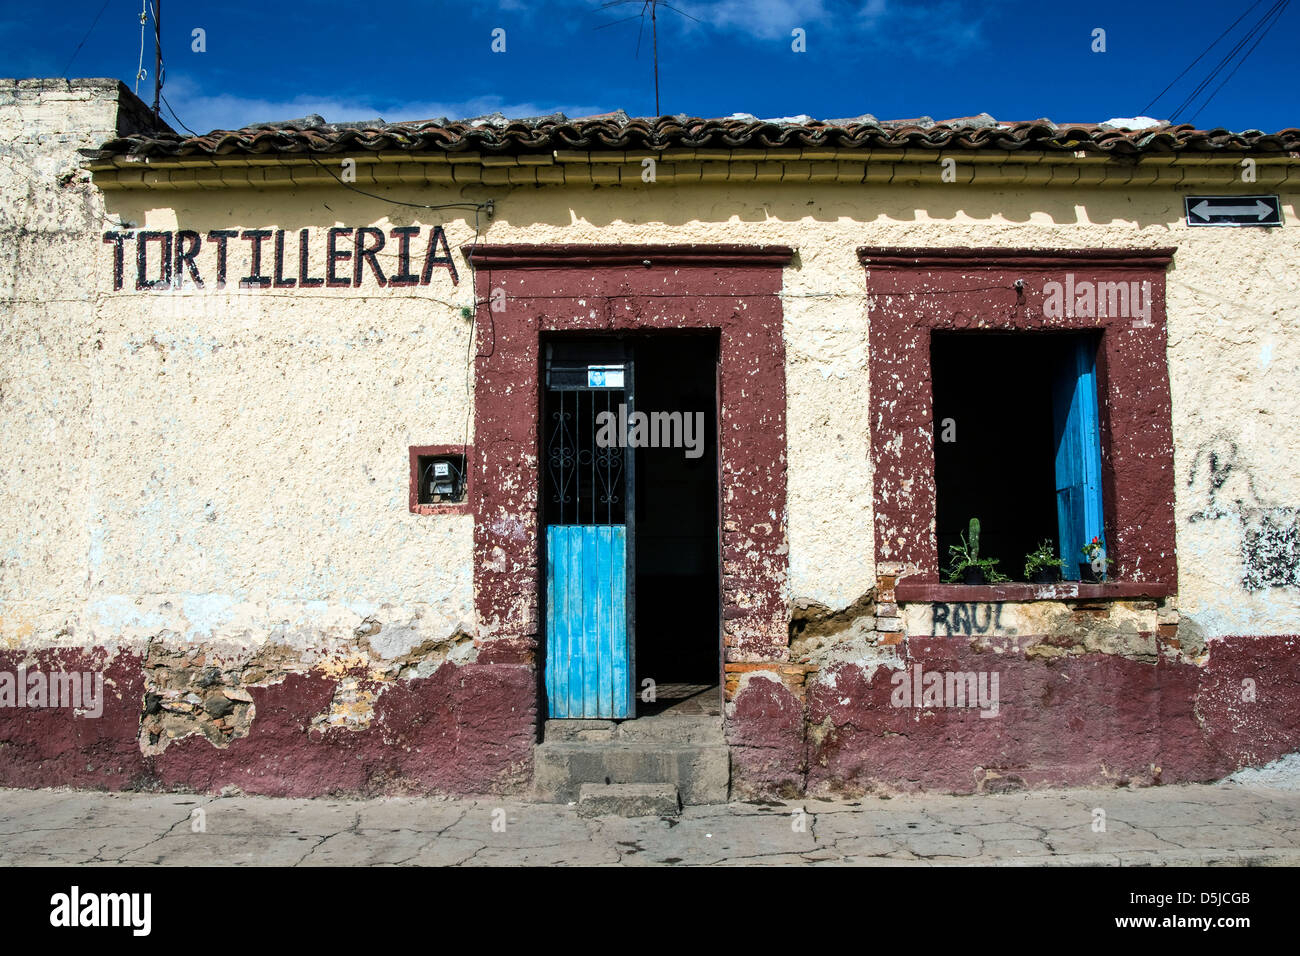 rural Mexico rustic village street scene Stock Photo